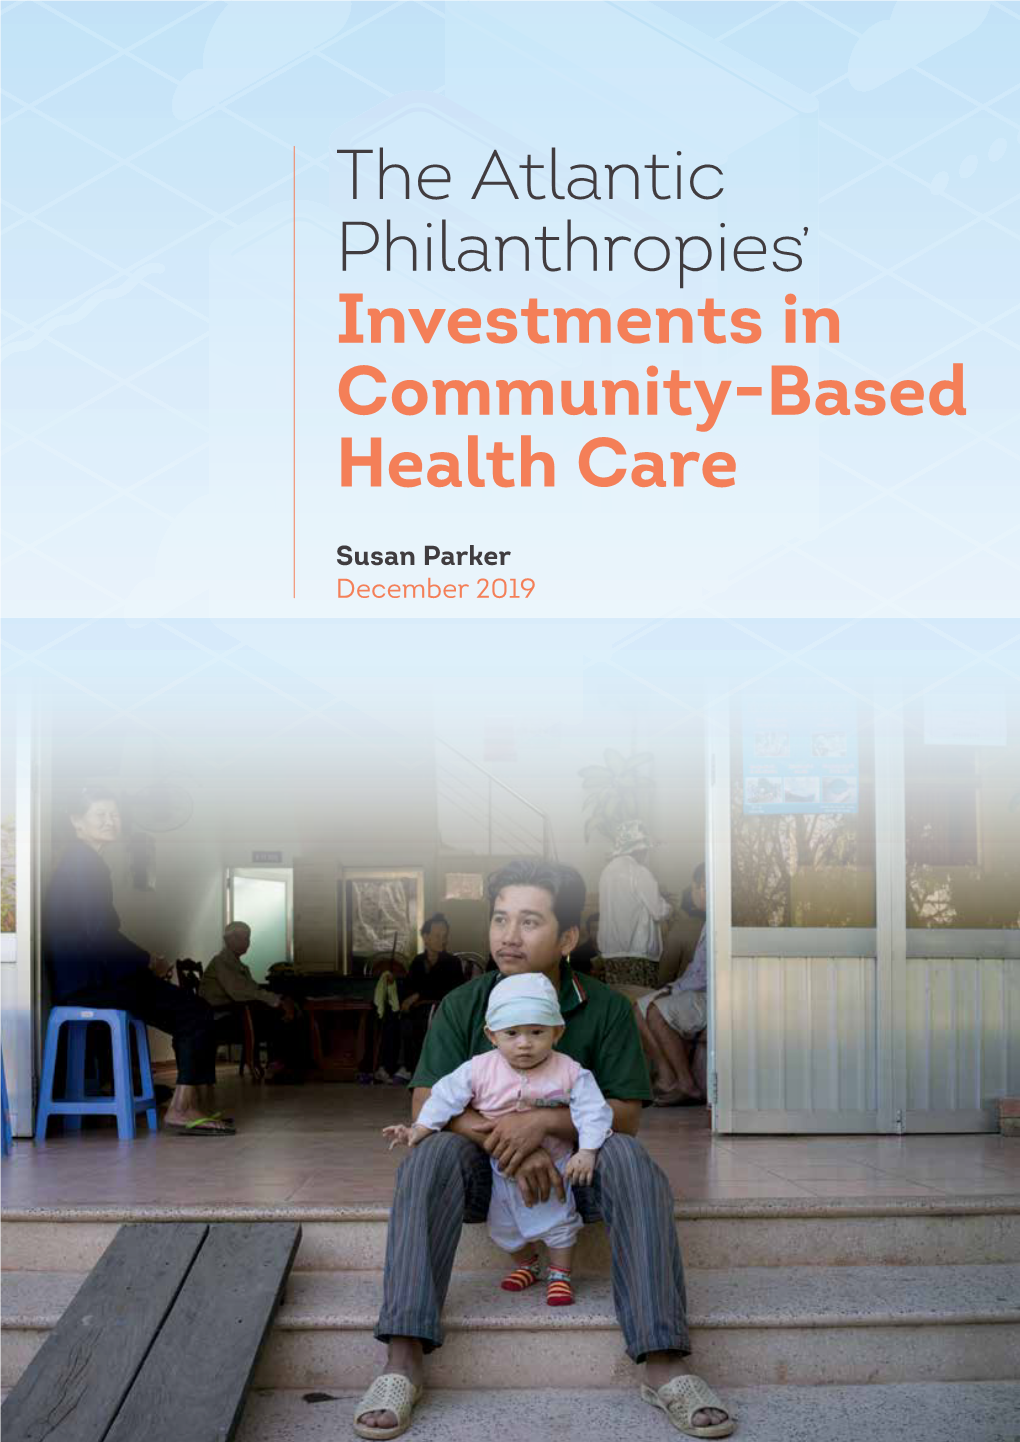 The Atlantic Philanthropies' Investments in Community-Based